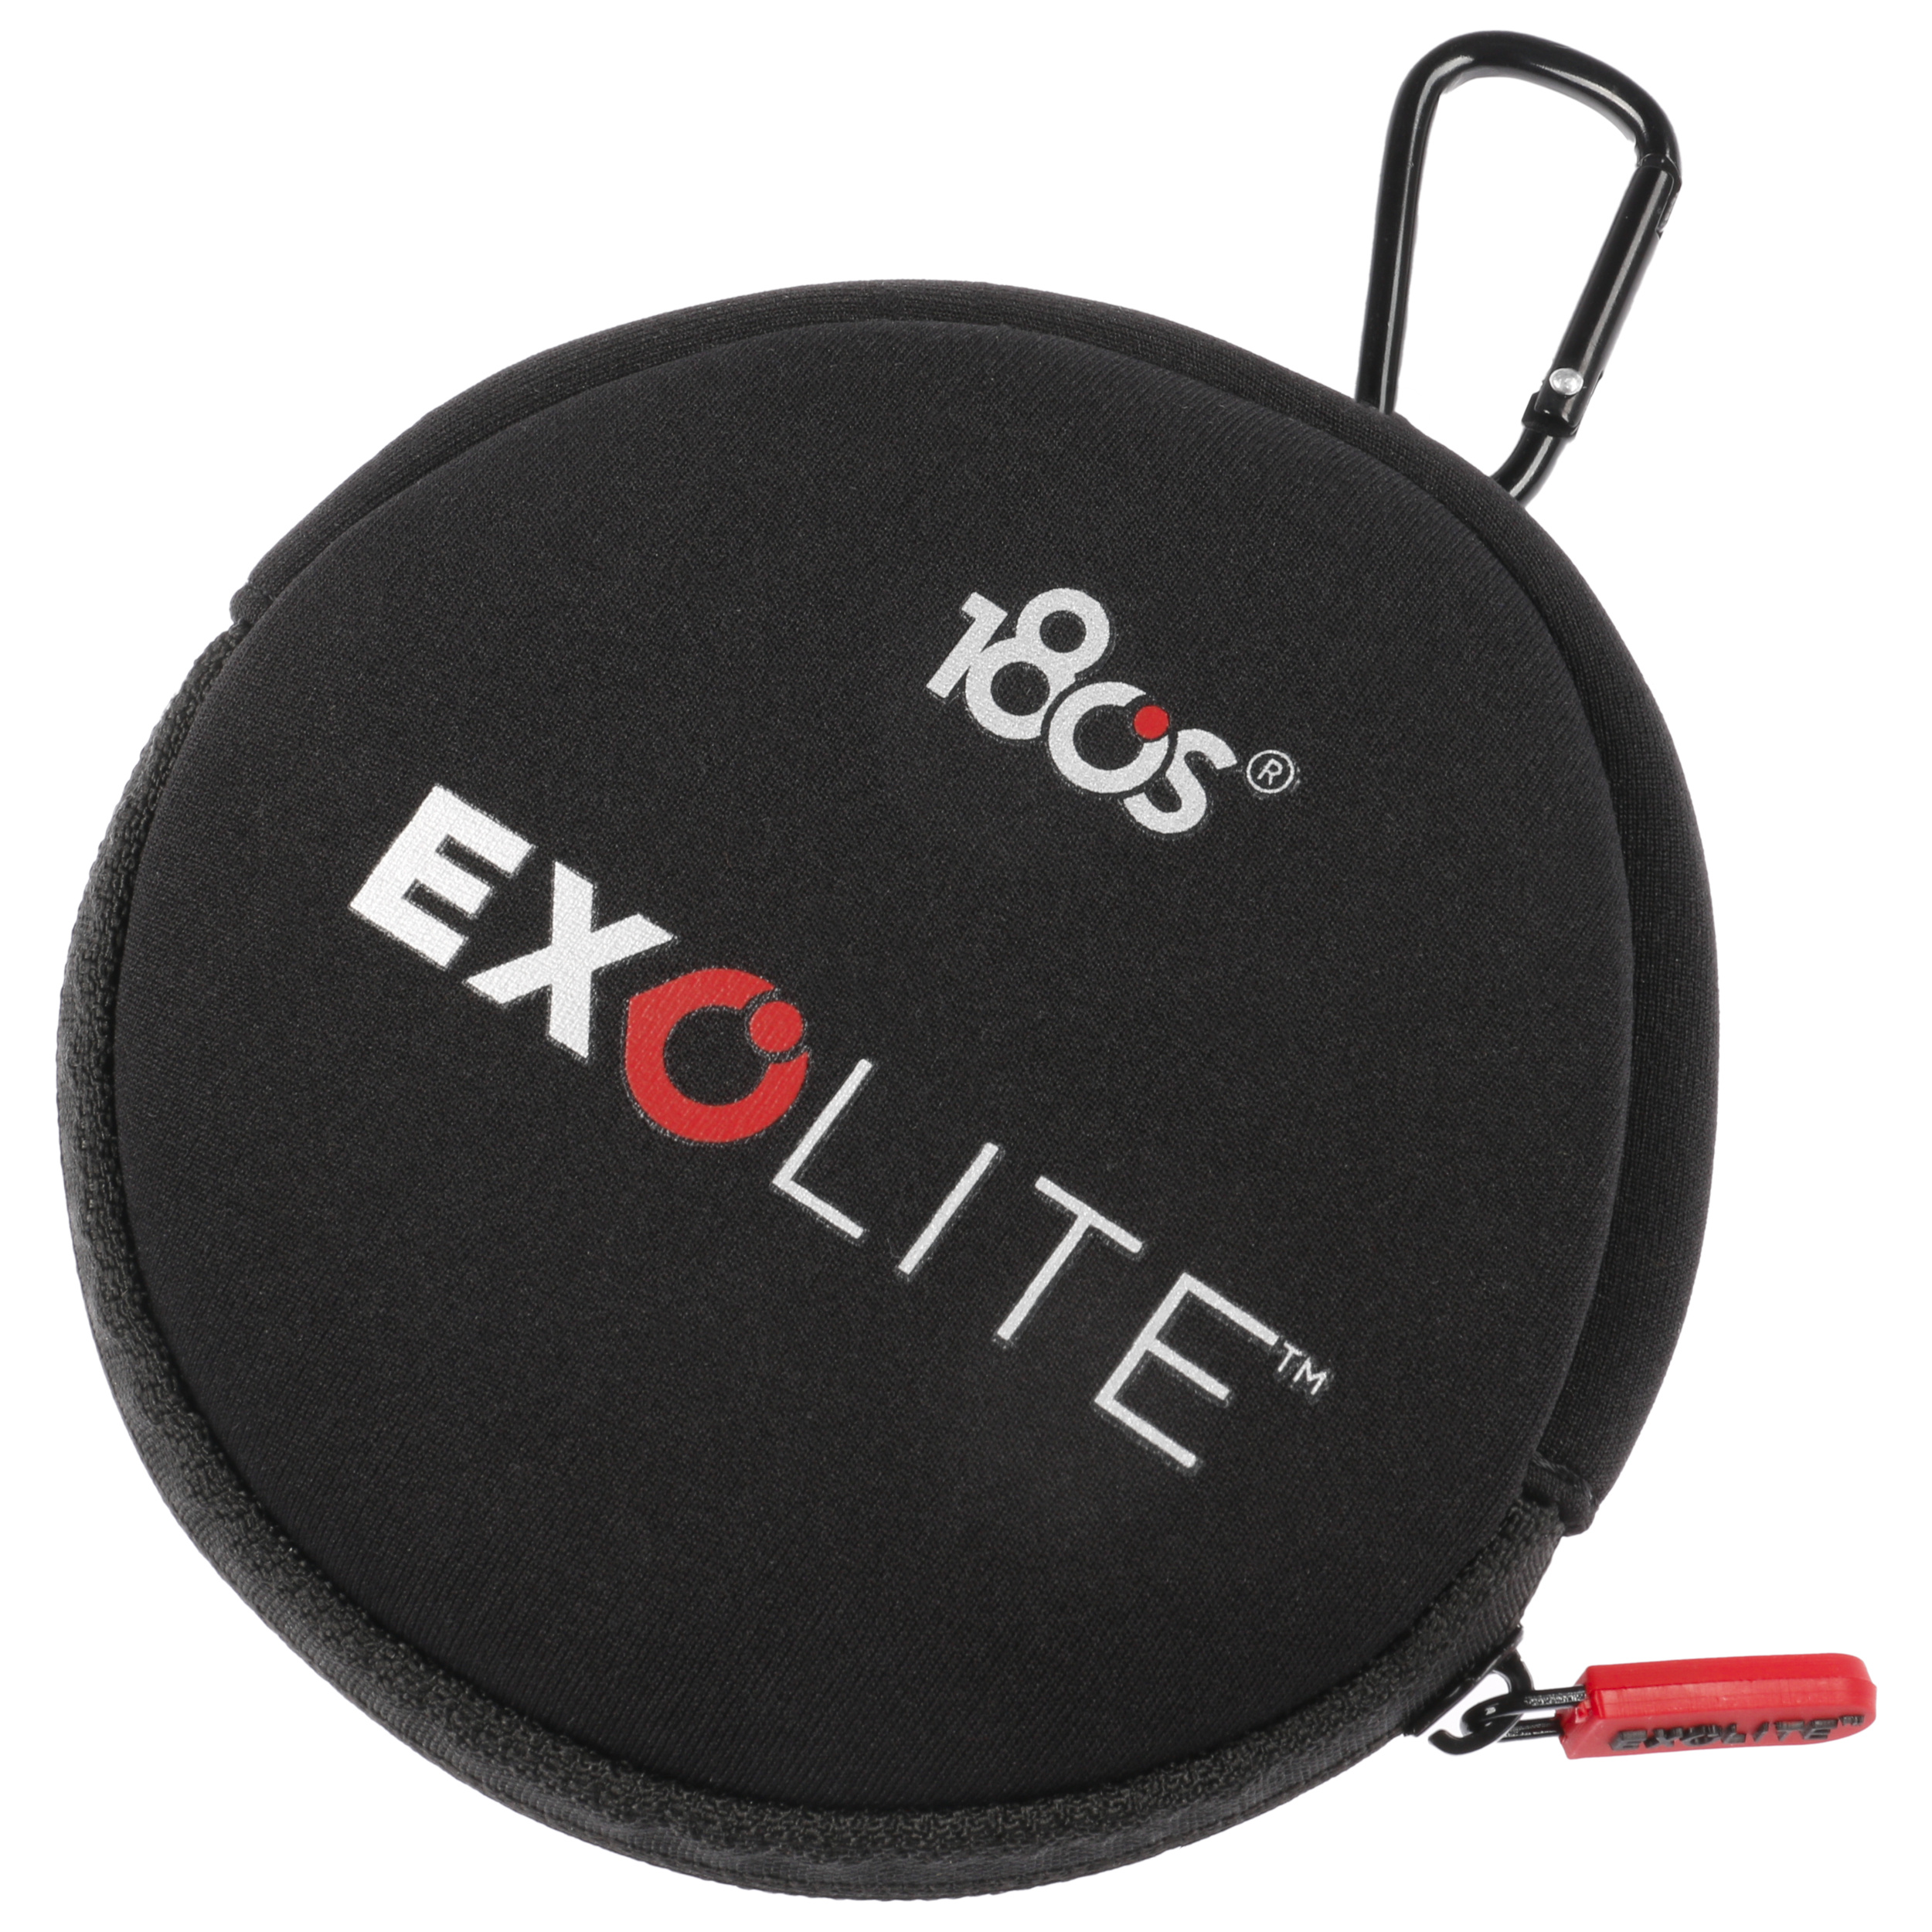 180s EXOLITE Unisex Ultra-Thin & Lightweight Behind-the-head Ear Warmers 